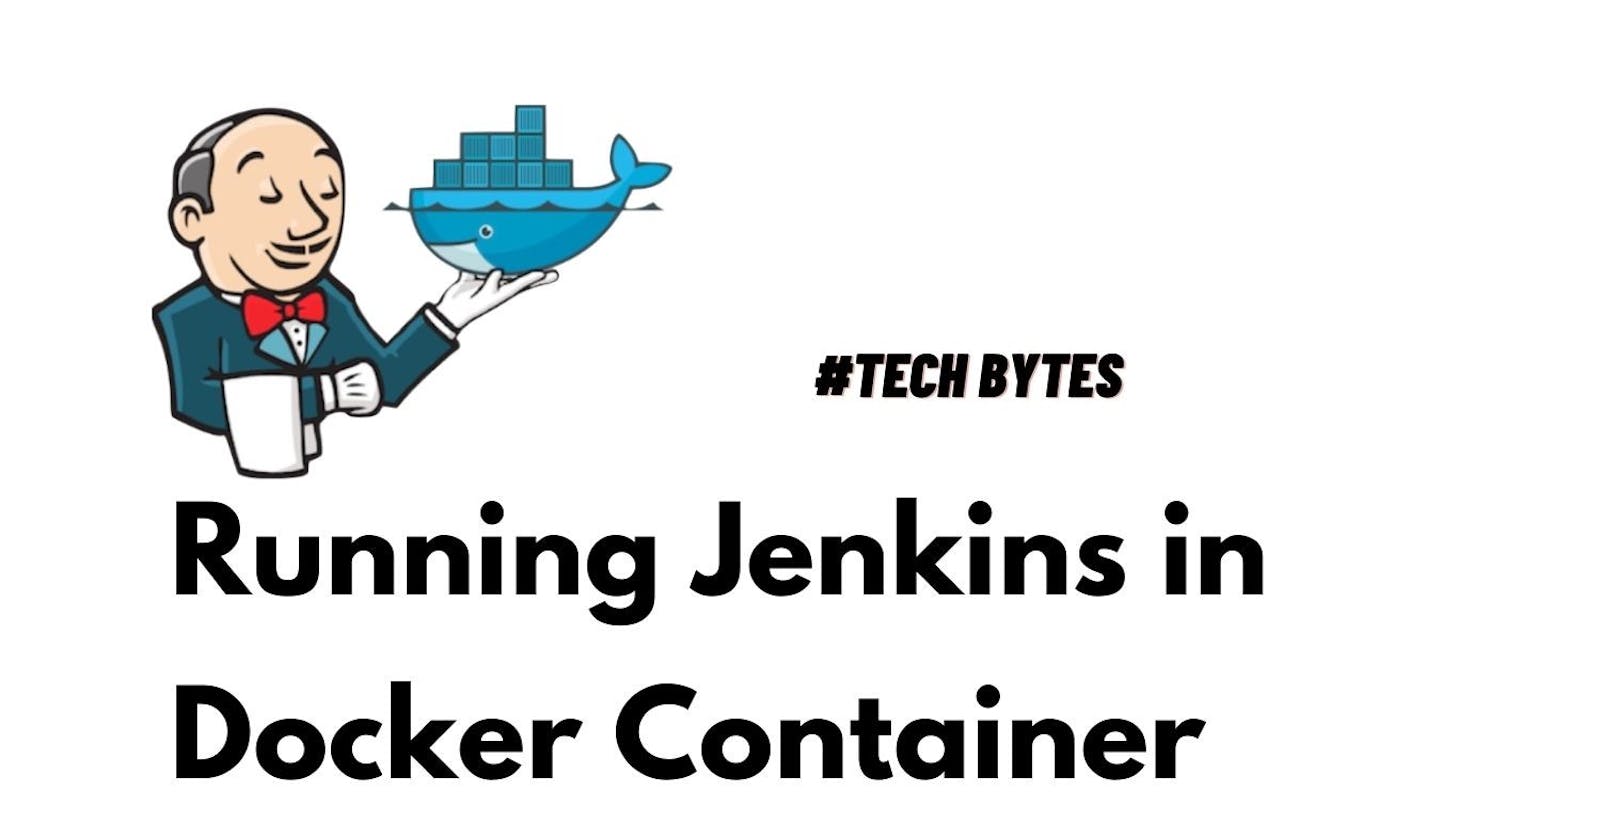 Tech bytes# Running Jenkins in a Docker Container